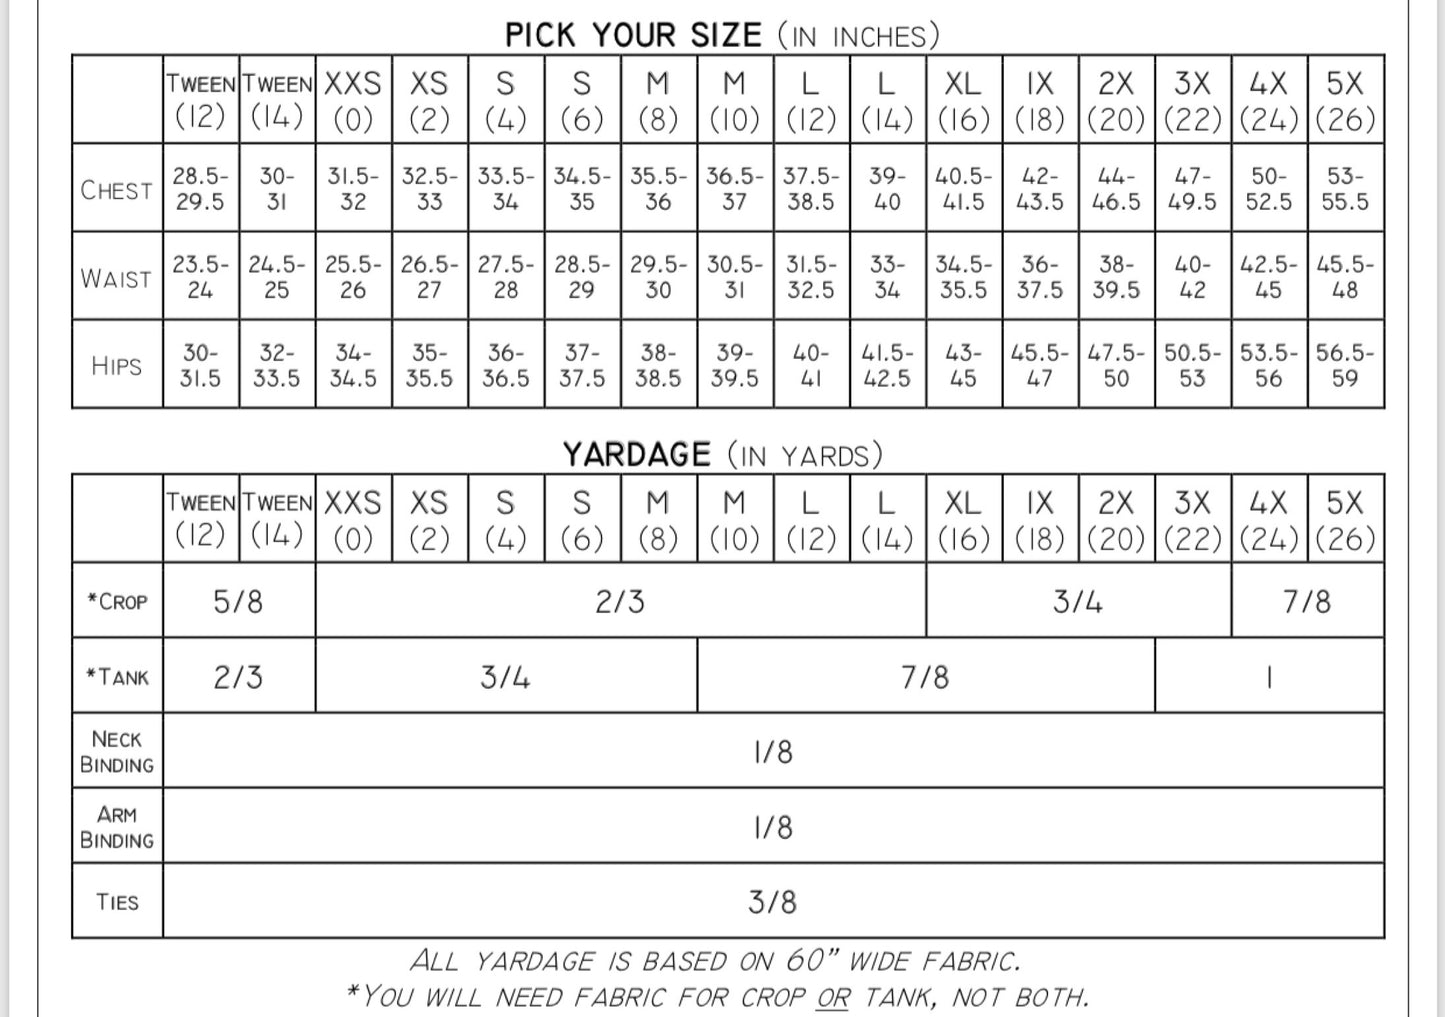 The Bonnaroo Bundle PDF Sewing Pattern